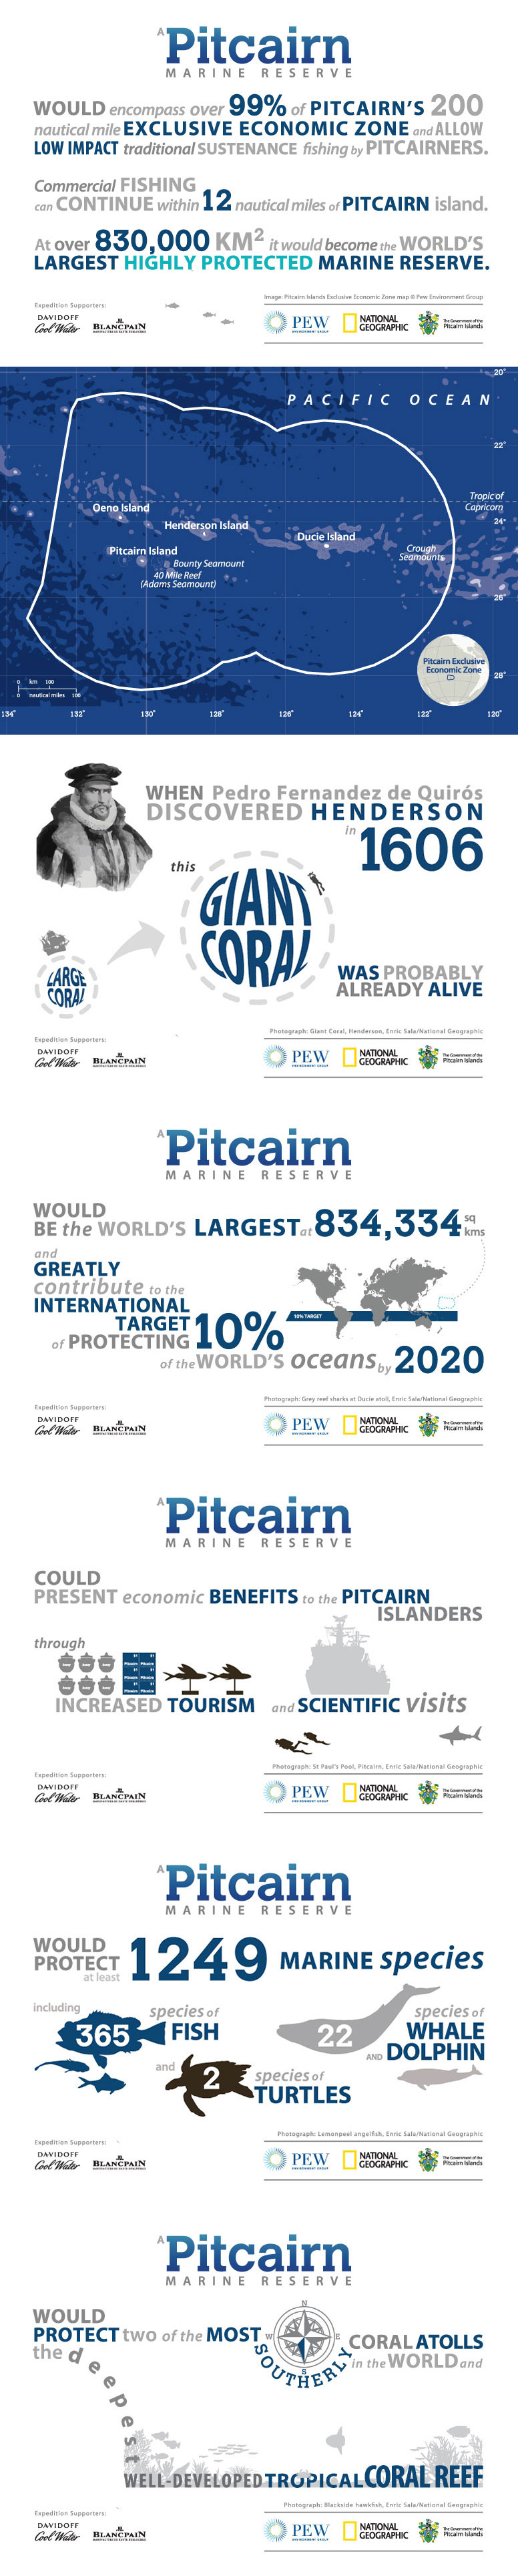 Pitcairn Marine Reserve Infographic